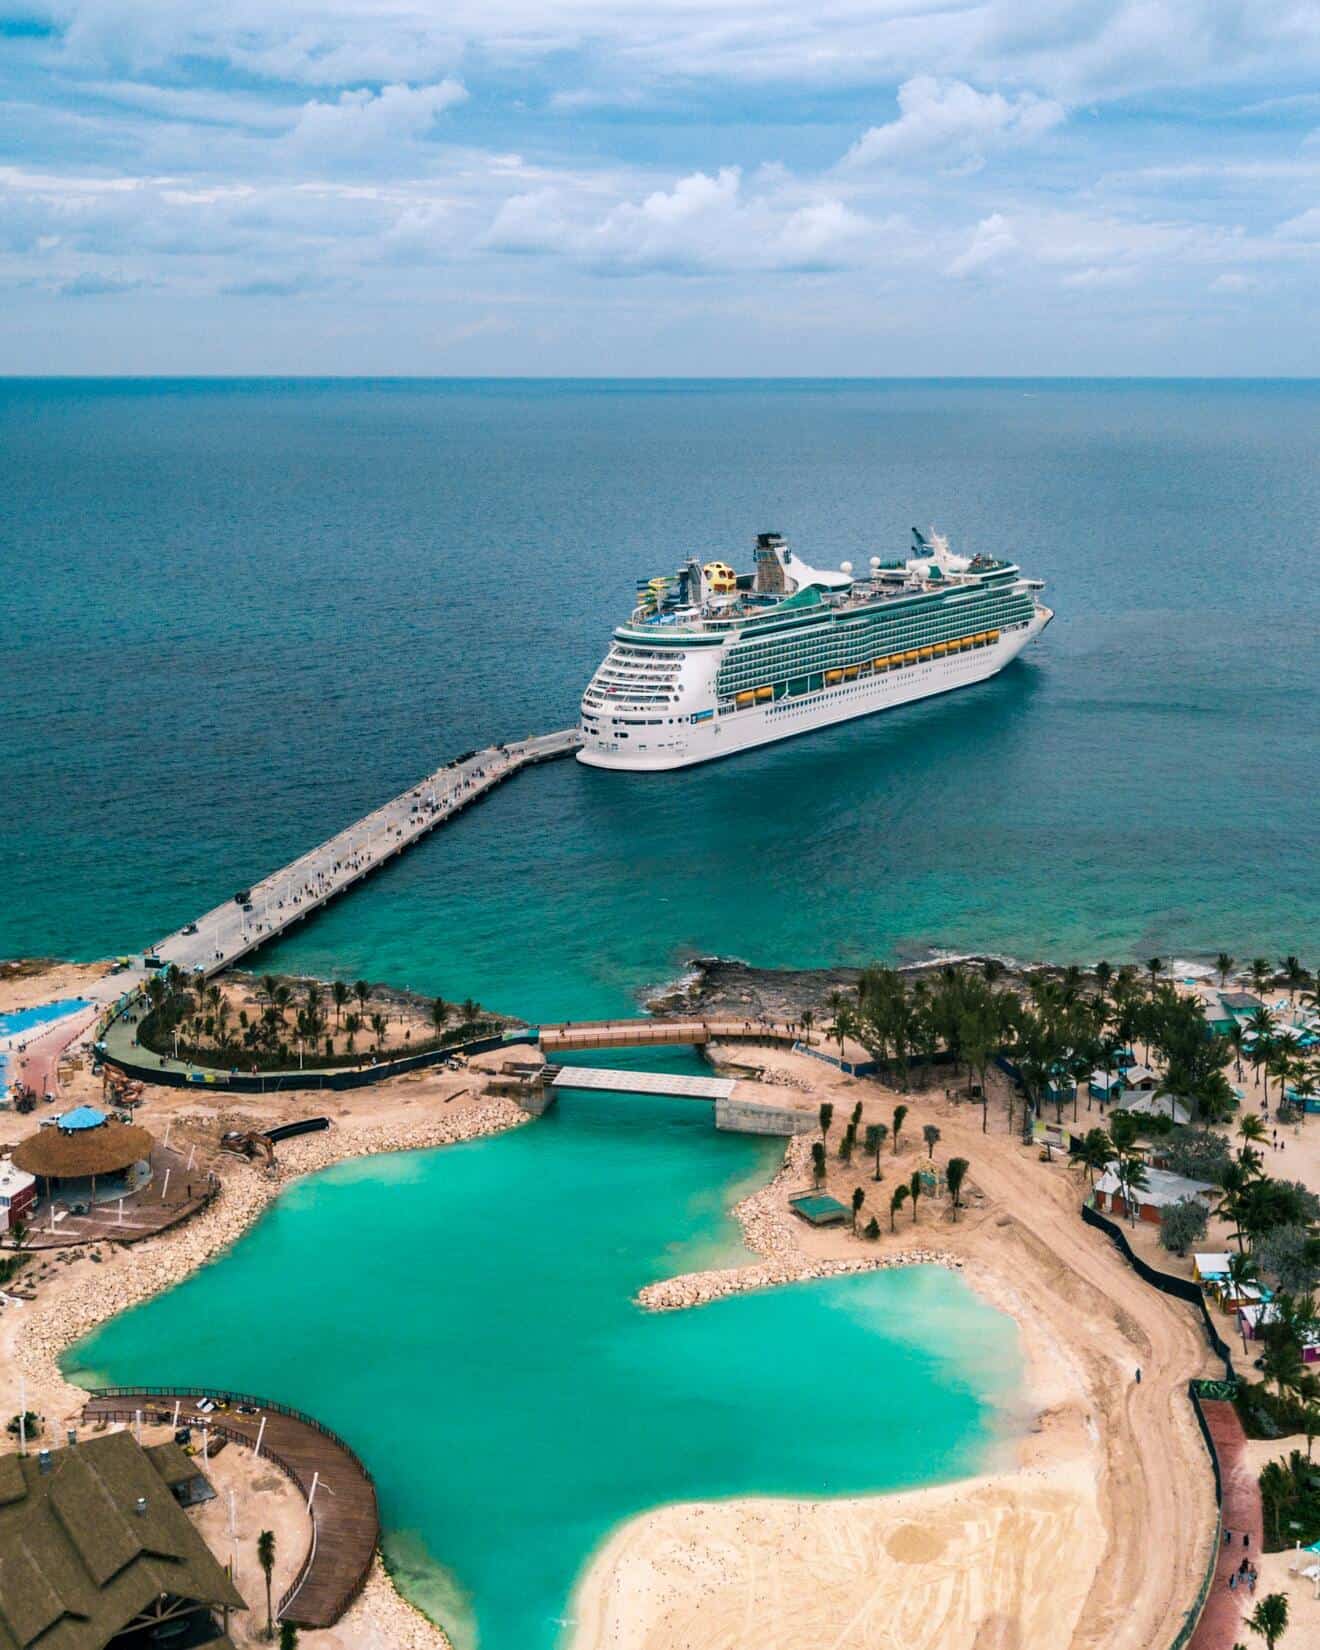 cruise ship by the bahamas bay